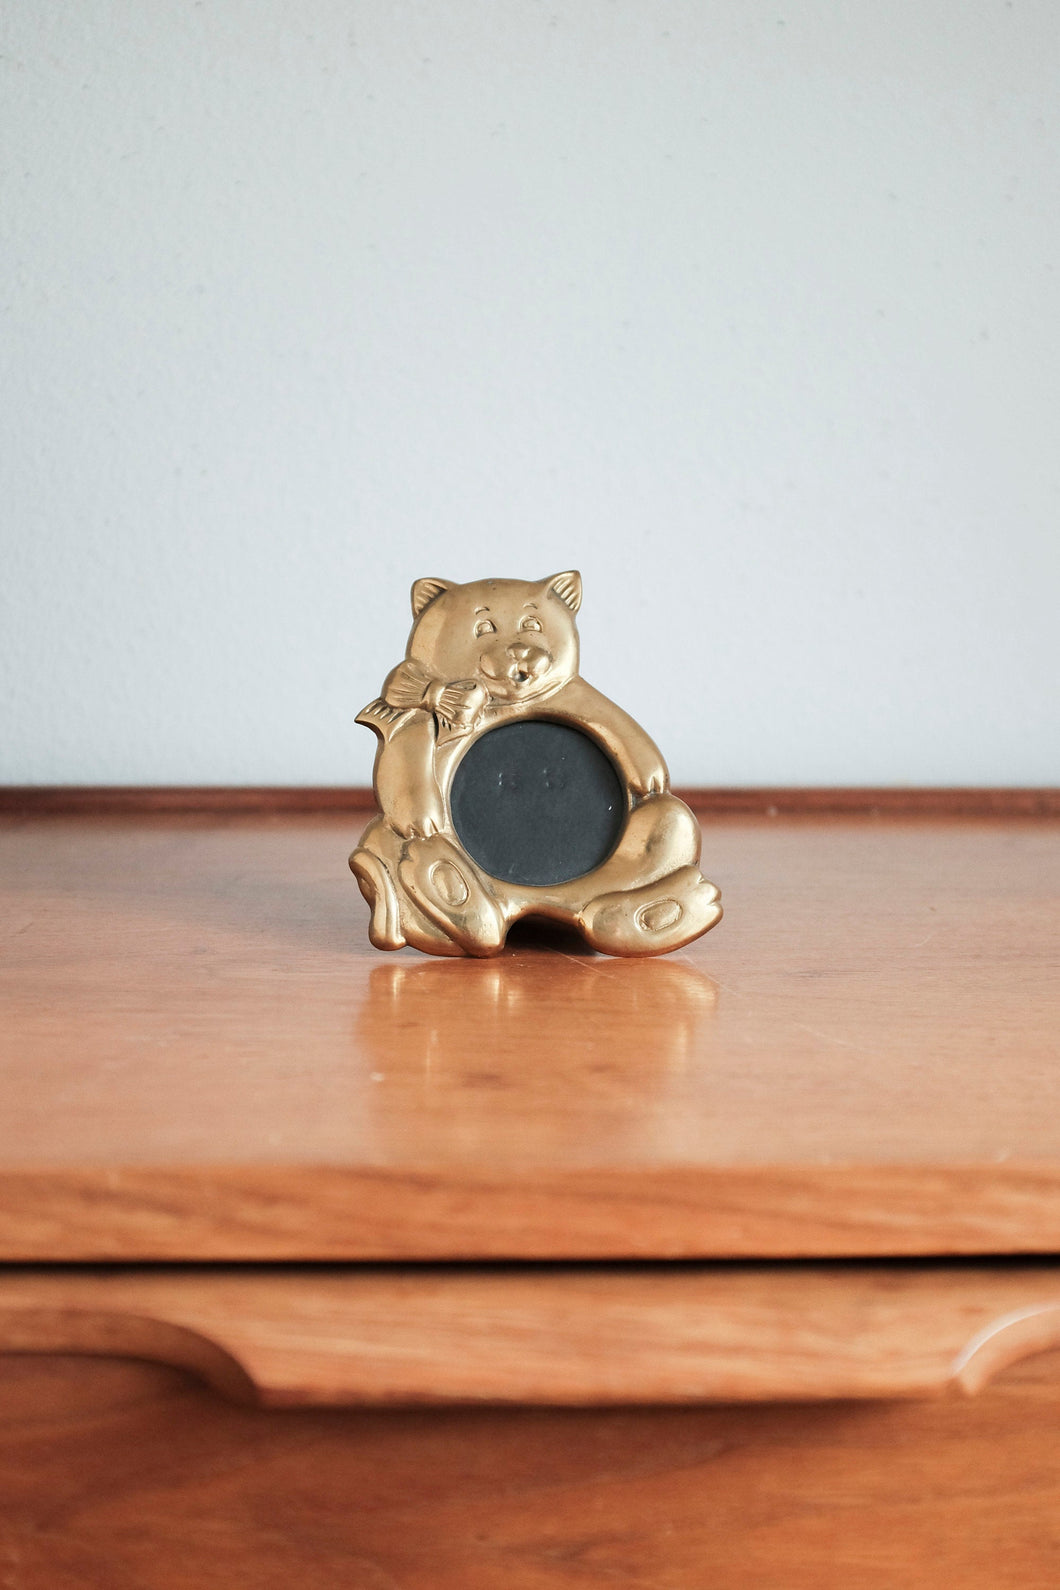 Brass Bear picture frame / photo holder / animal